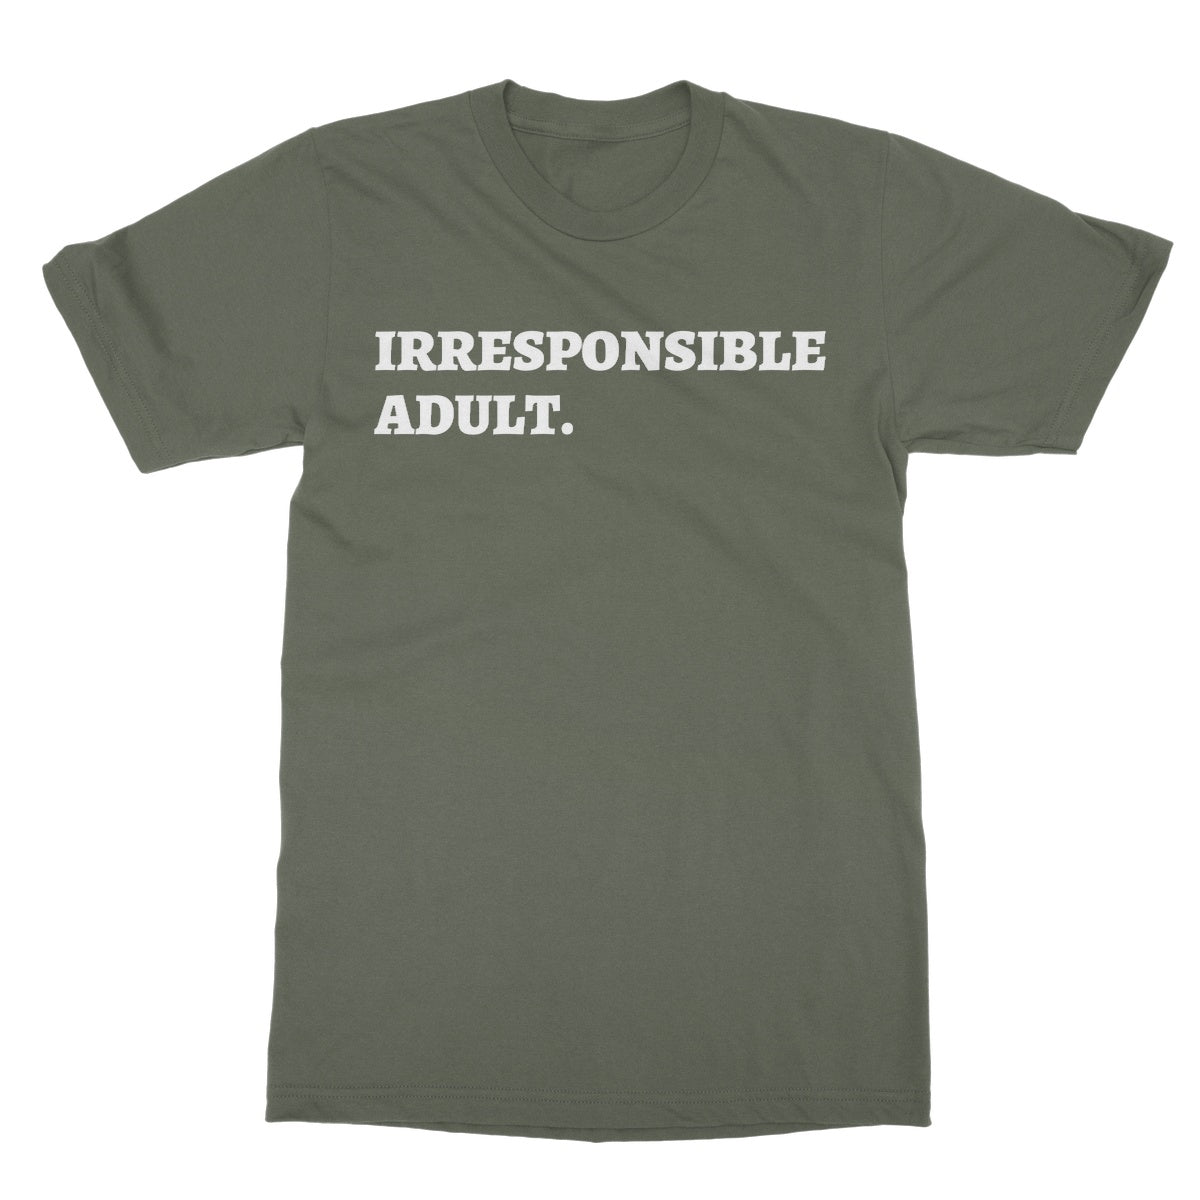 irresponsible adult t shirt green